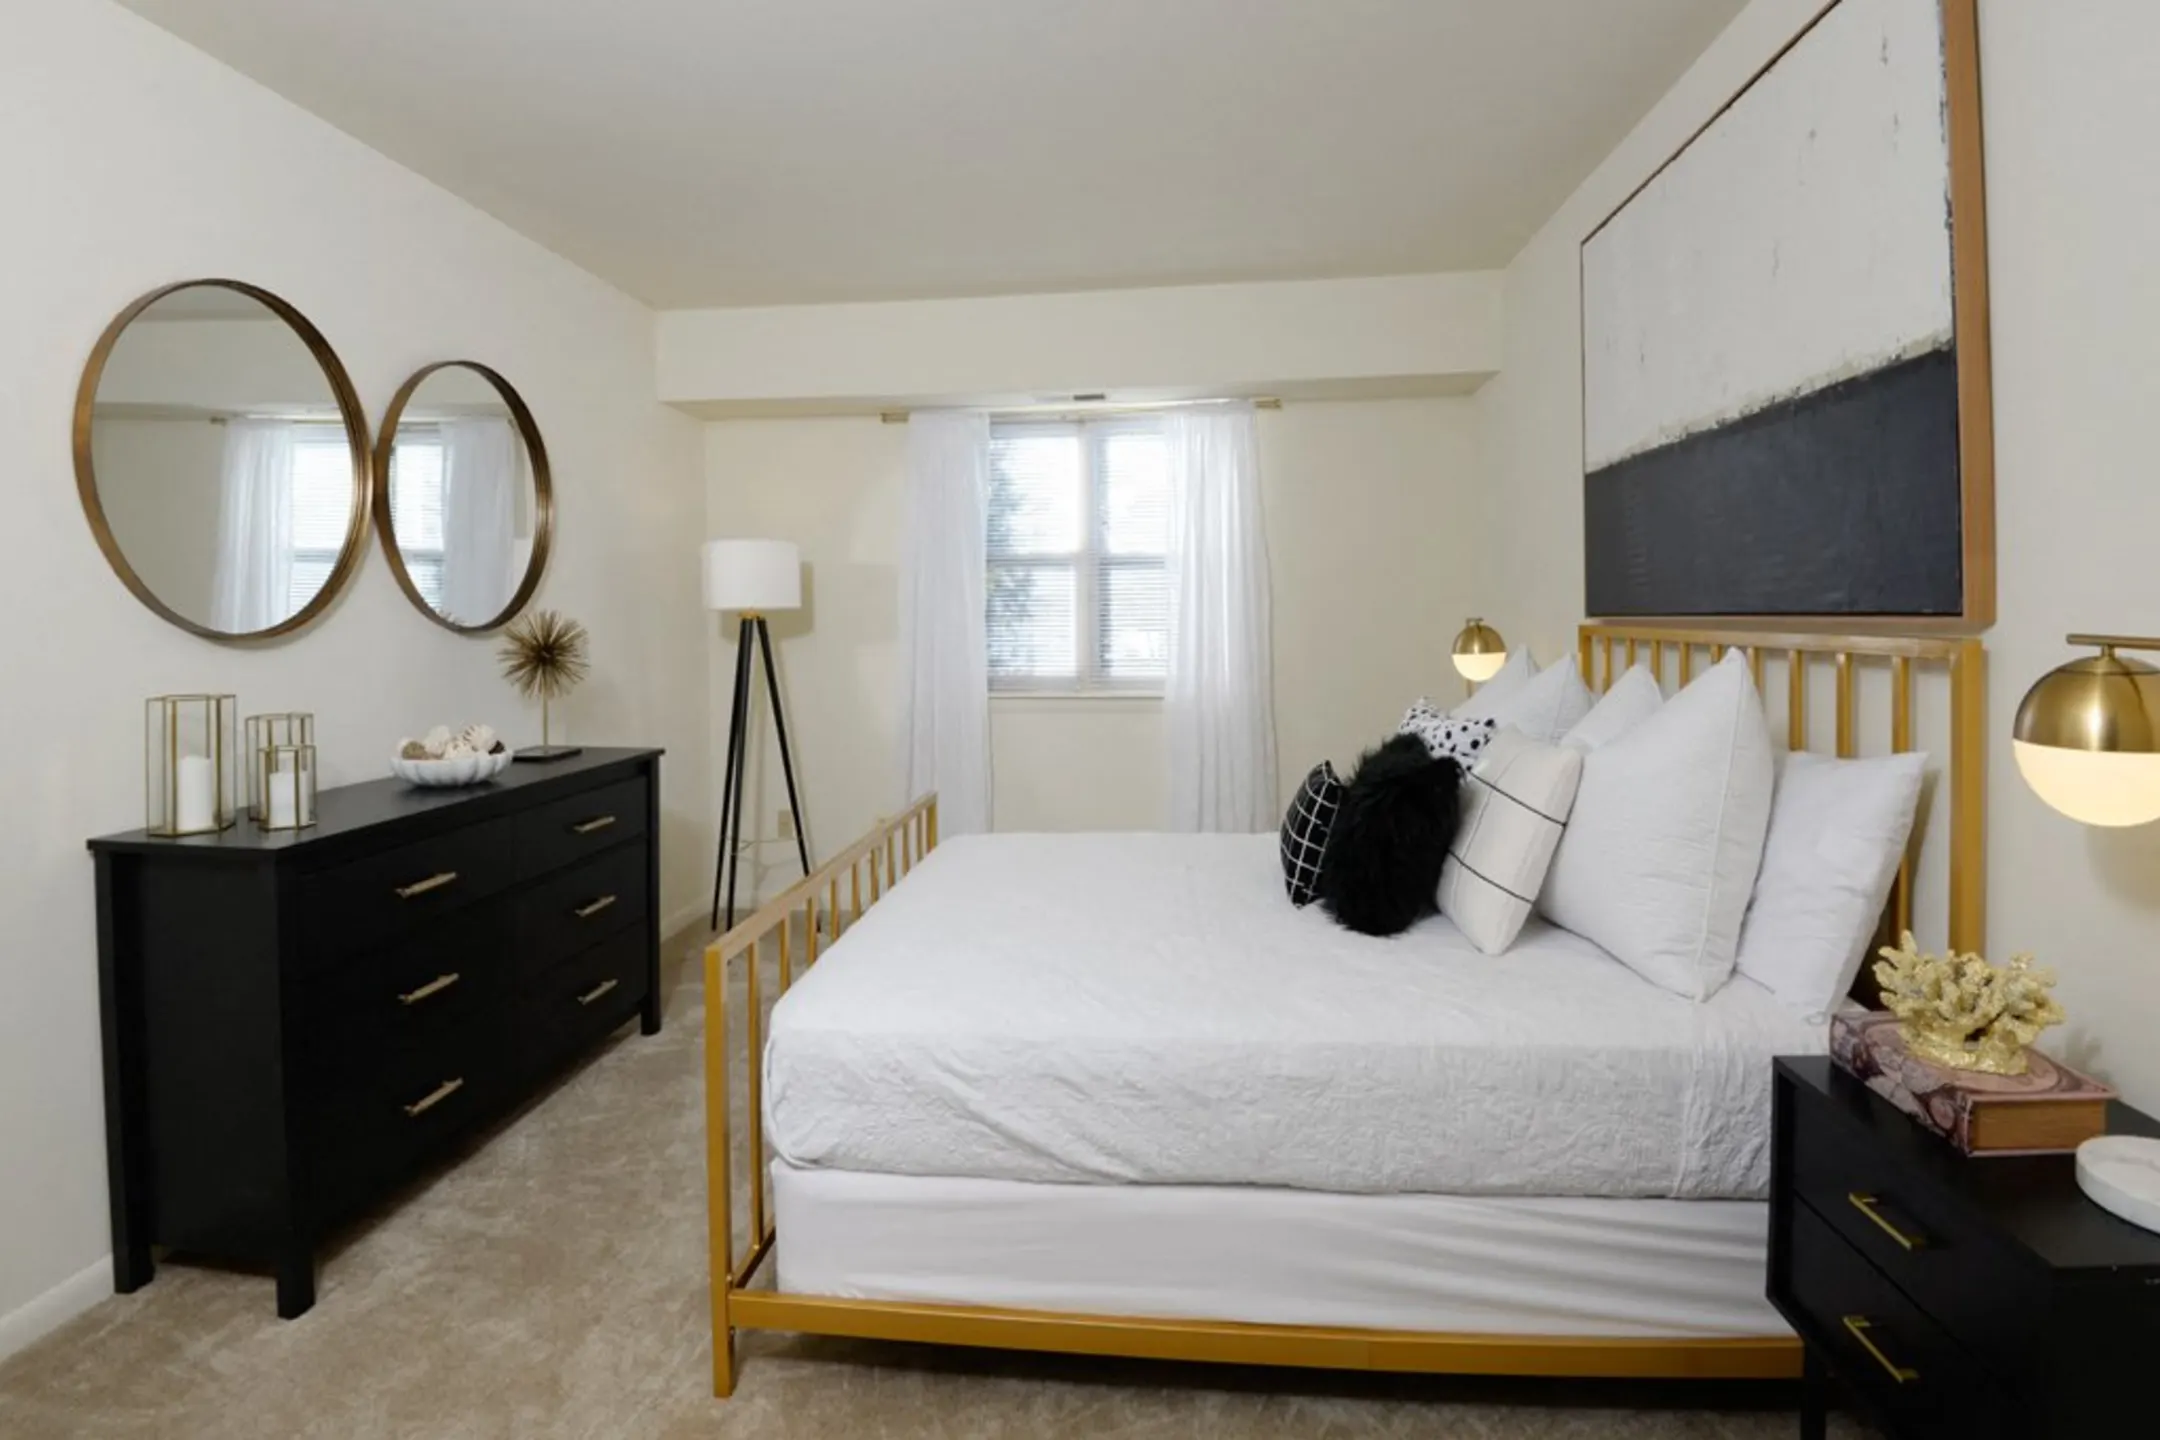 Bedroom - Woodsdale Apartments - Abingdon, MD